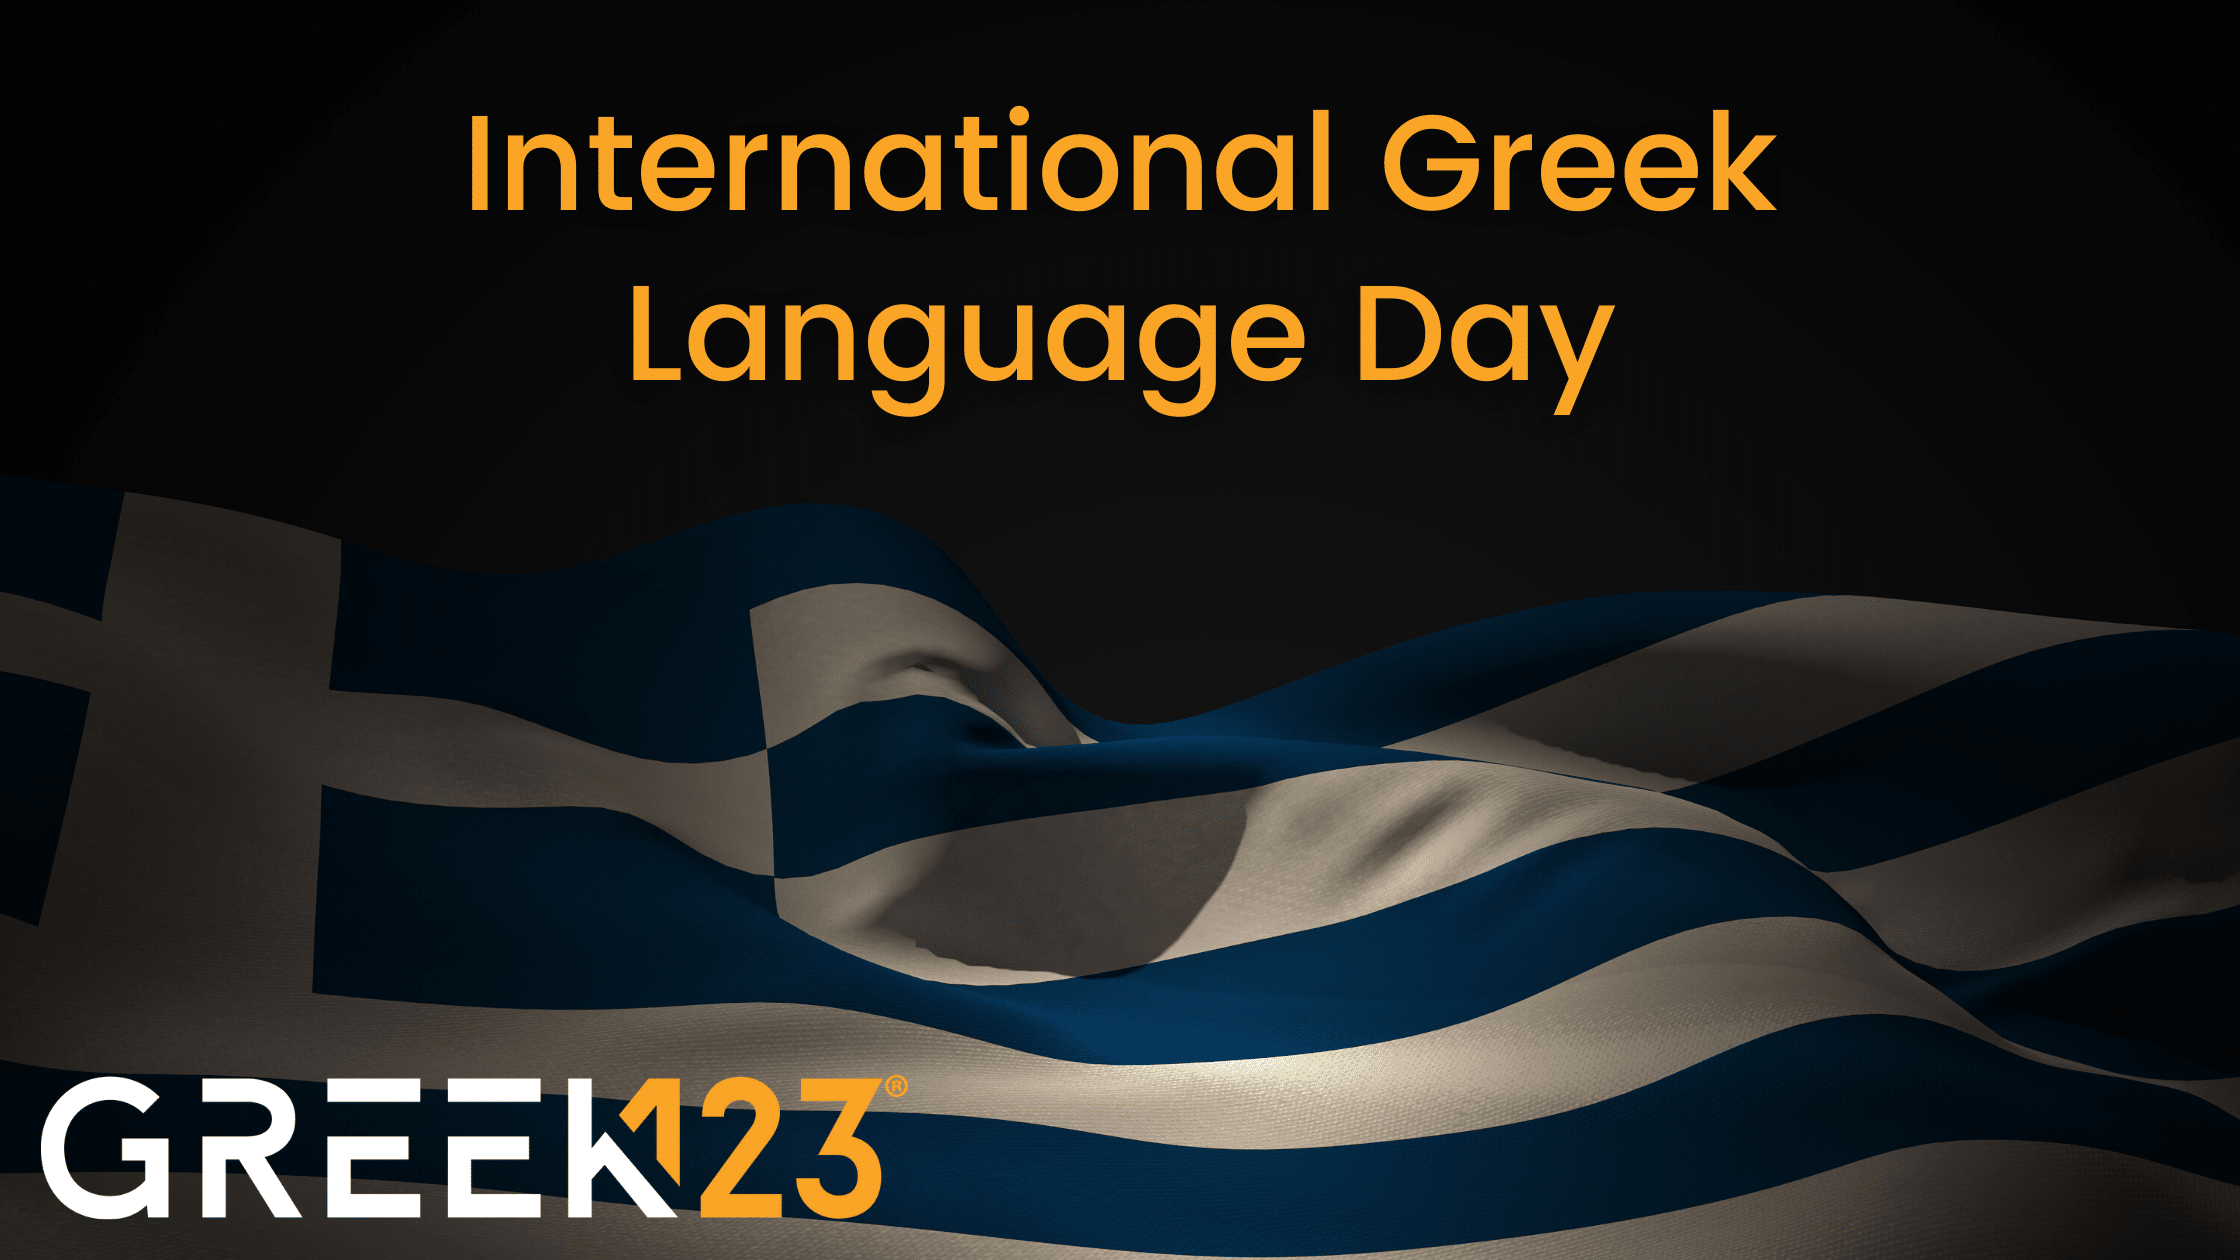 Celebrating International Greek Language Day 2022